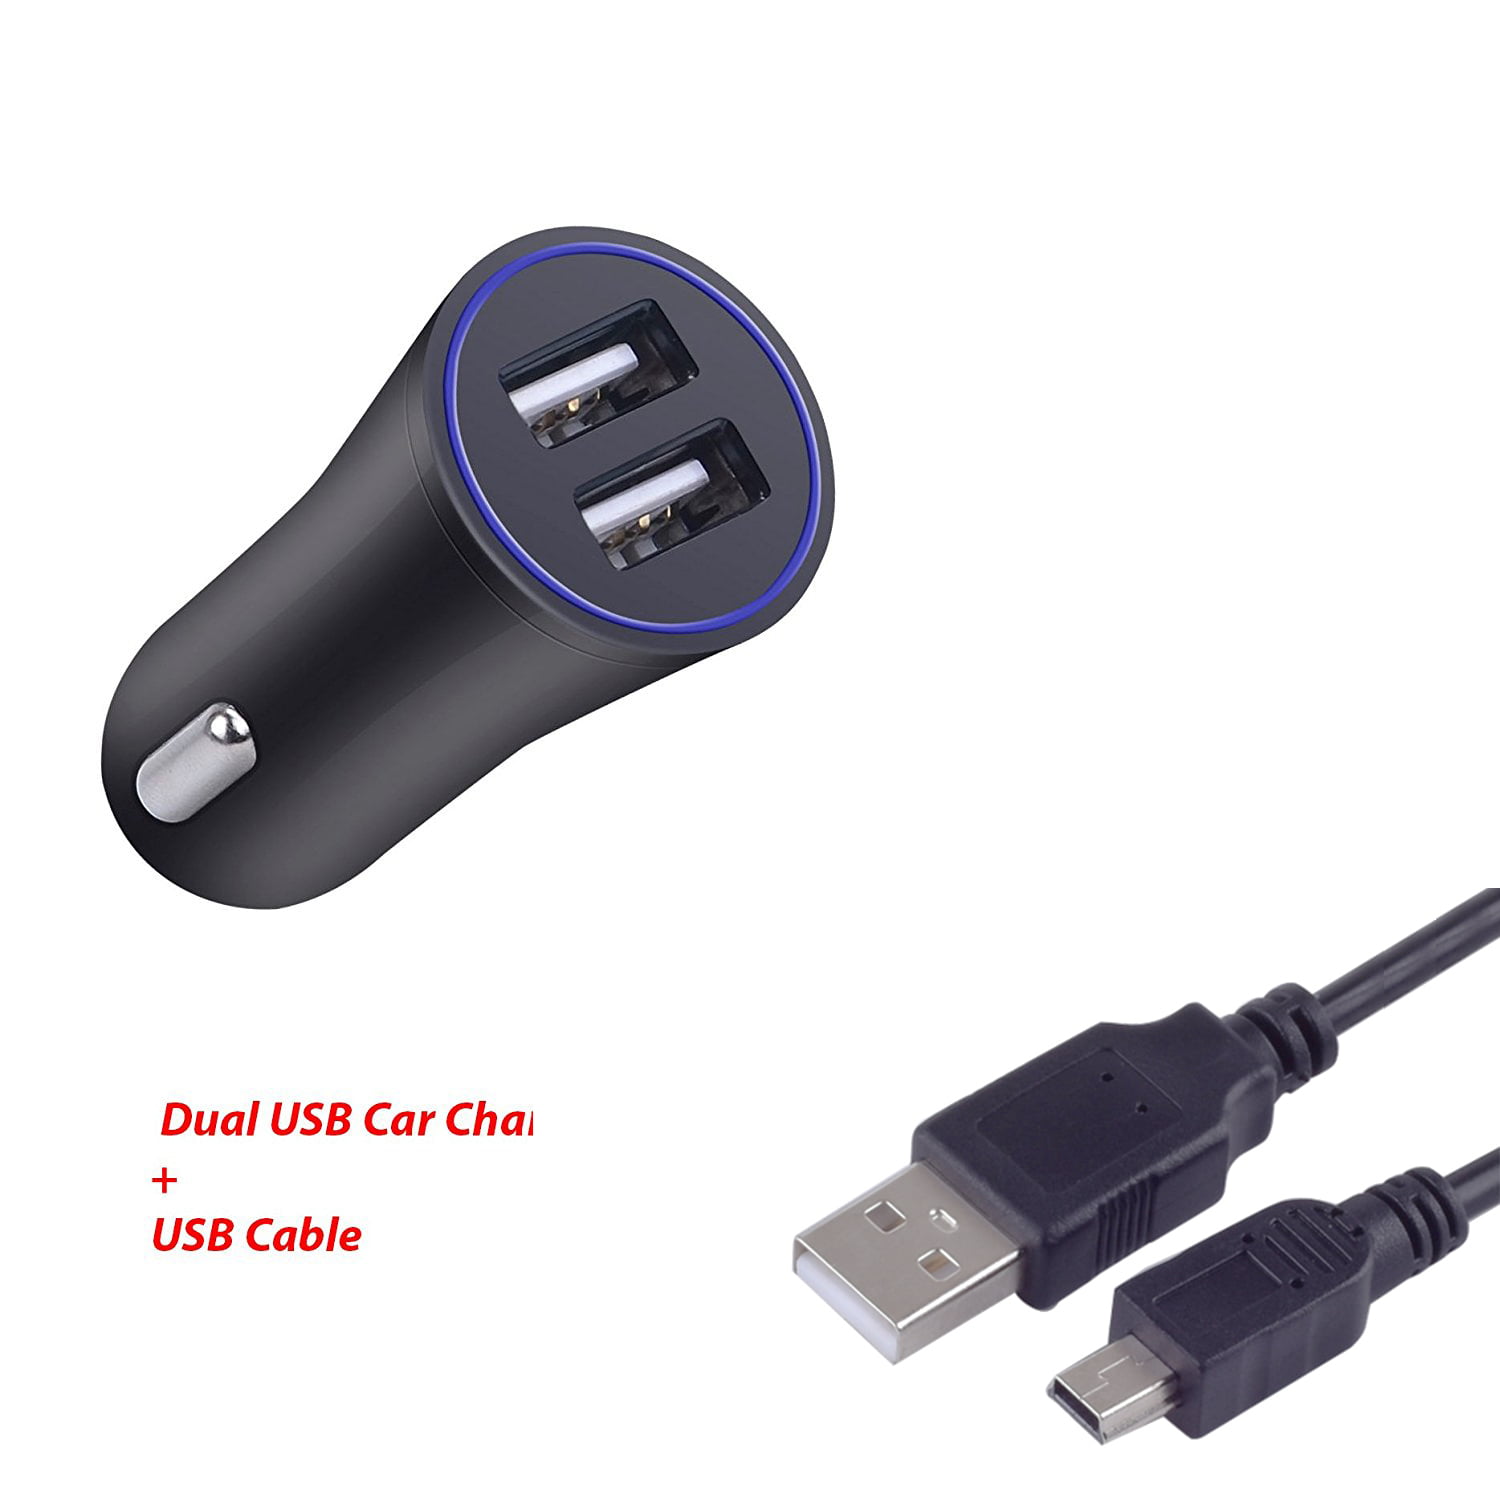 Hardwire USB Car Charger power cord for GARMIN nuvi 56 56lm 56lmt 55lmt Sat Nav 